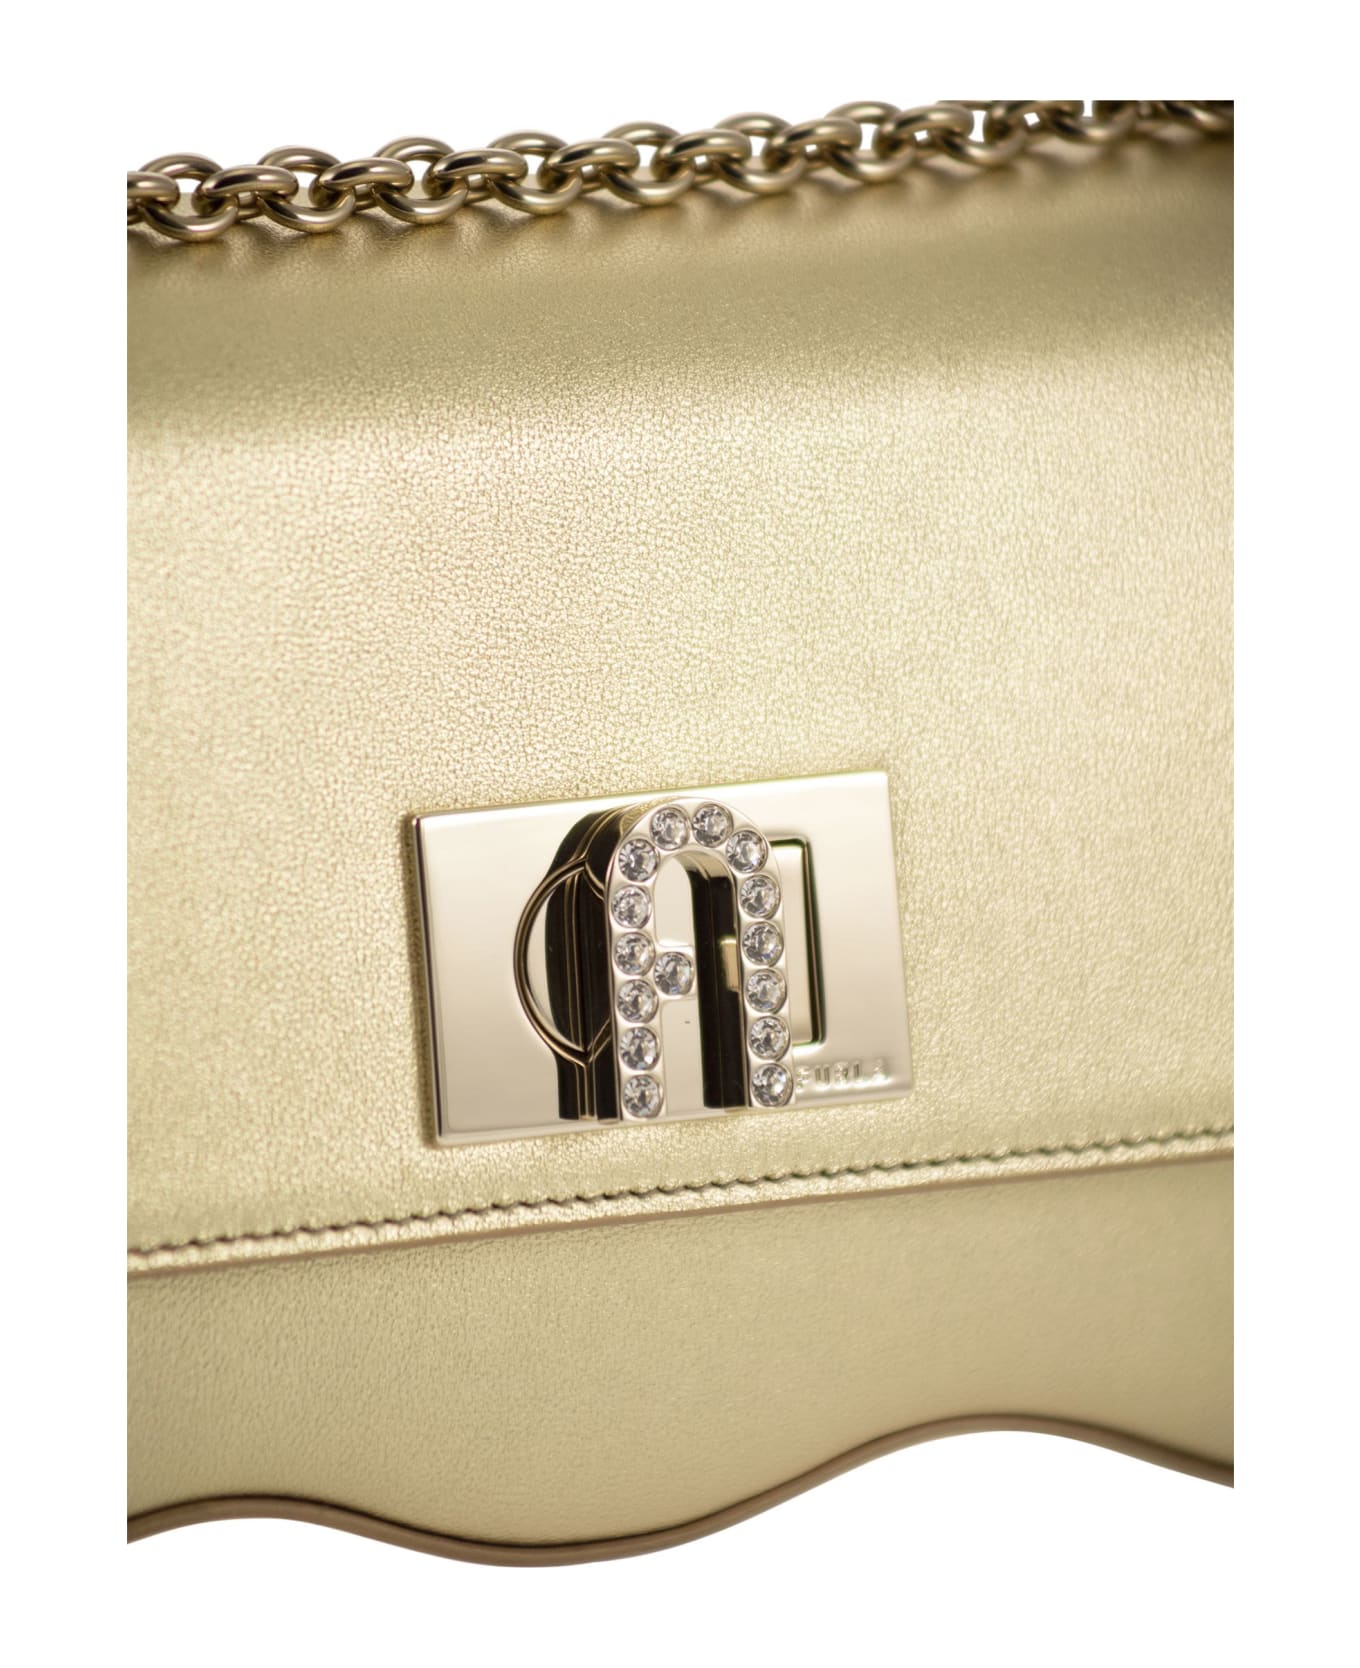 Furla 'furla 1927' Gold Calf Leather Bag - Gold